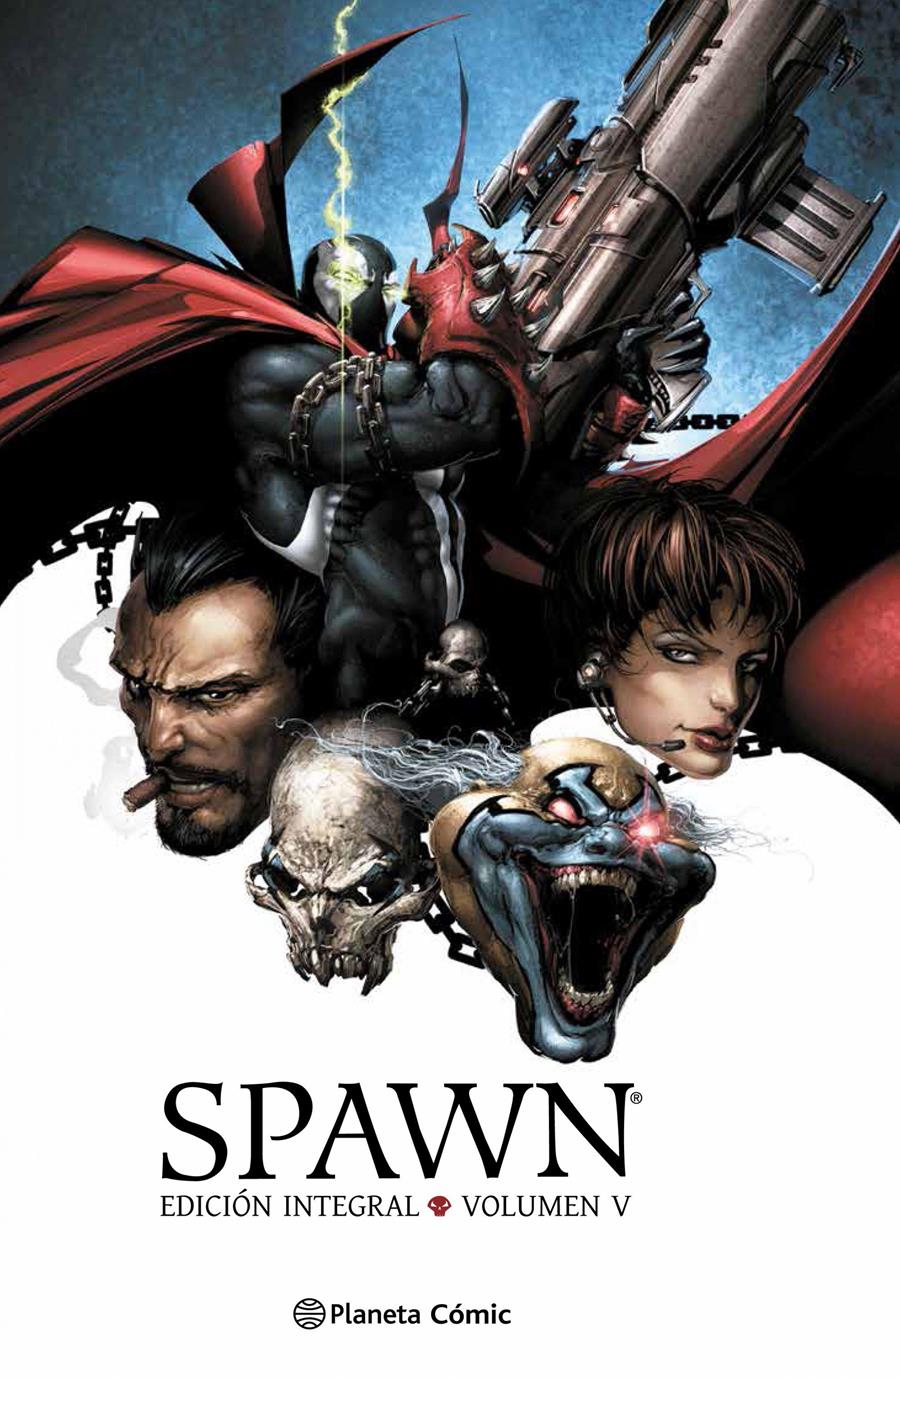 Spawn Integral nº 05 (Nueva edición) | N0118-PLA19 | Todd McFarlane | Terra de Còmic - Tu tienda de cómics online especializada en cómics, manga y merchandising